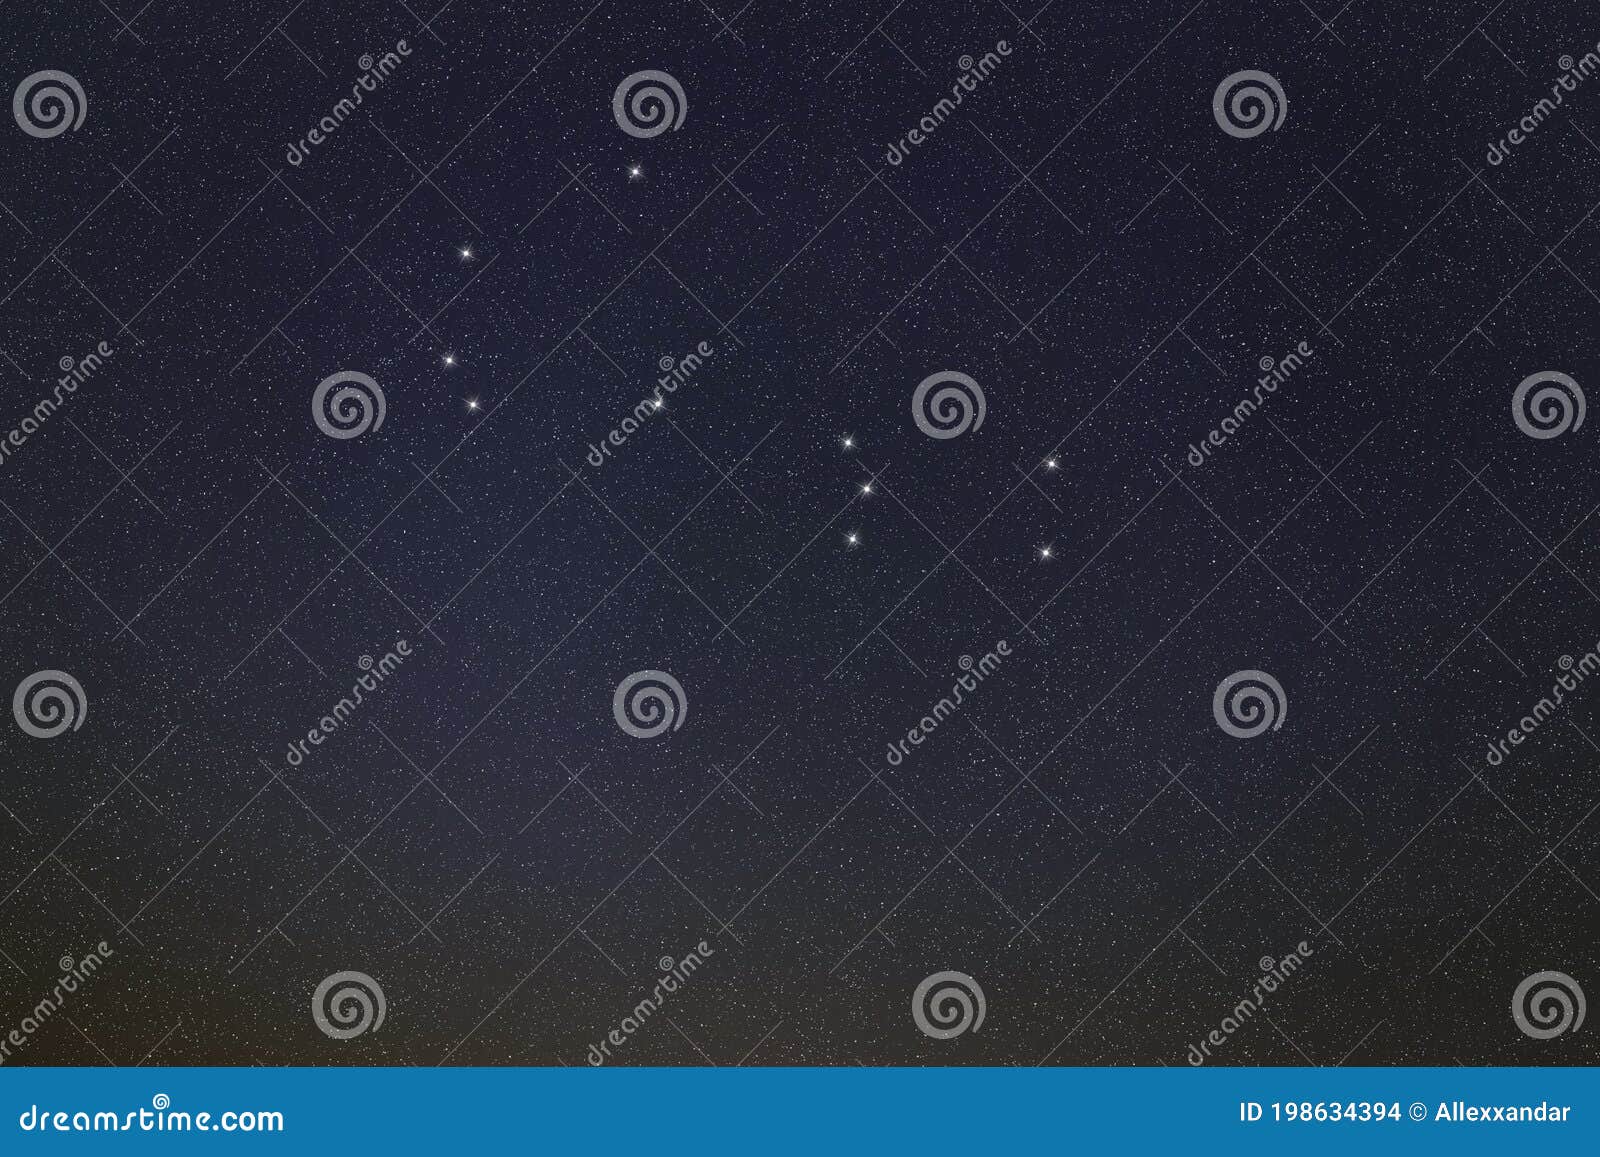 piscis austrinus star constellation, night sky, cluster of stars, deep space, southern fishÃÂ constellation